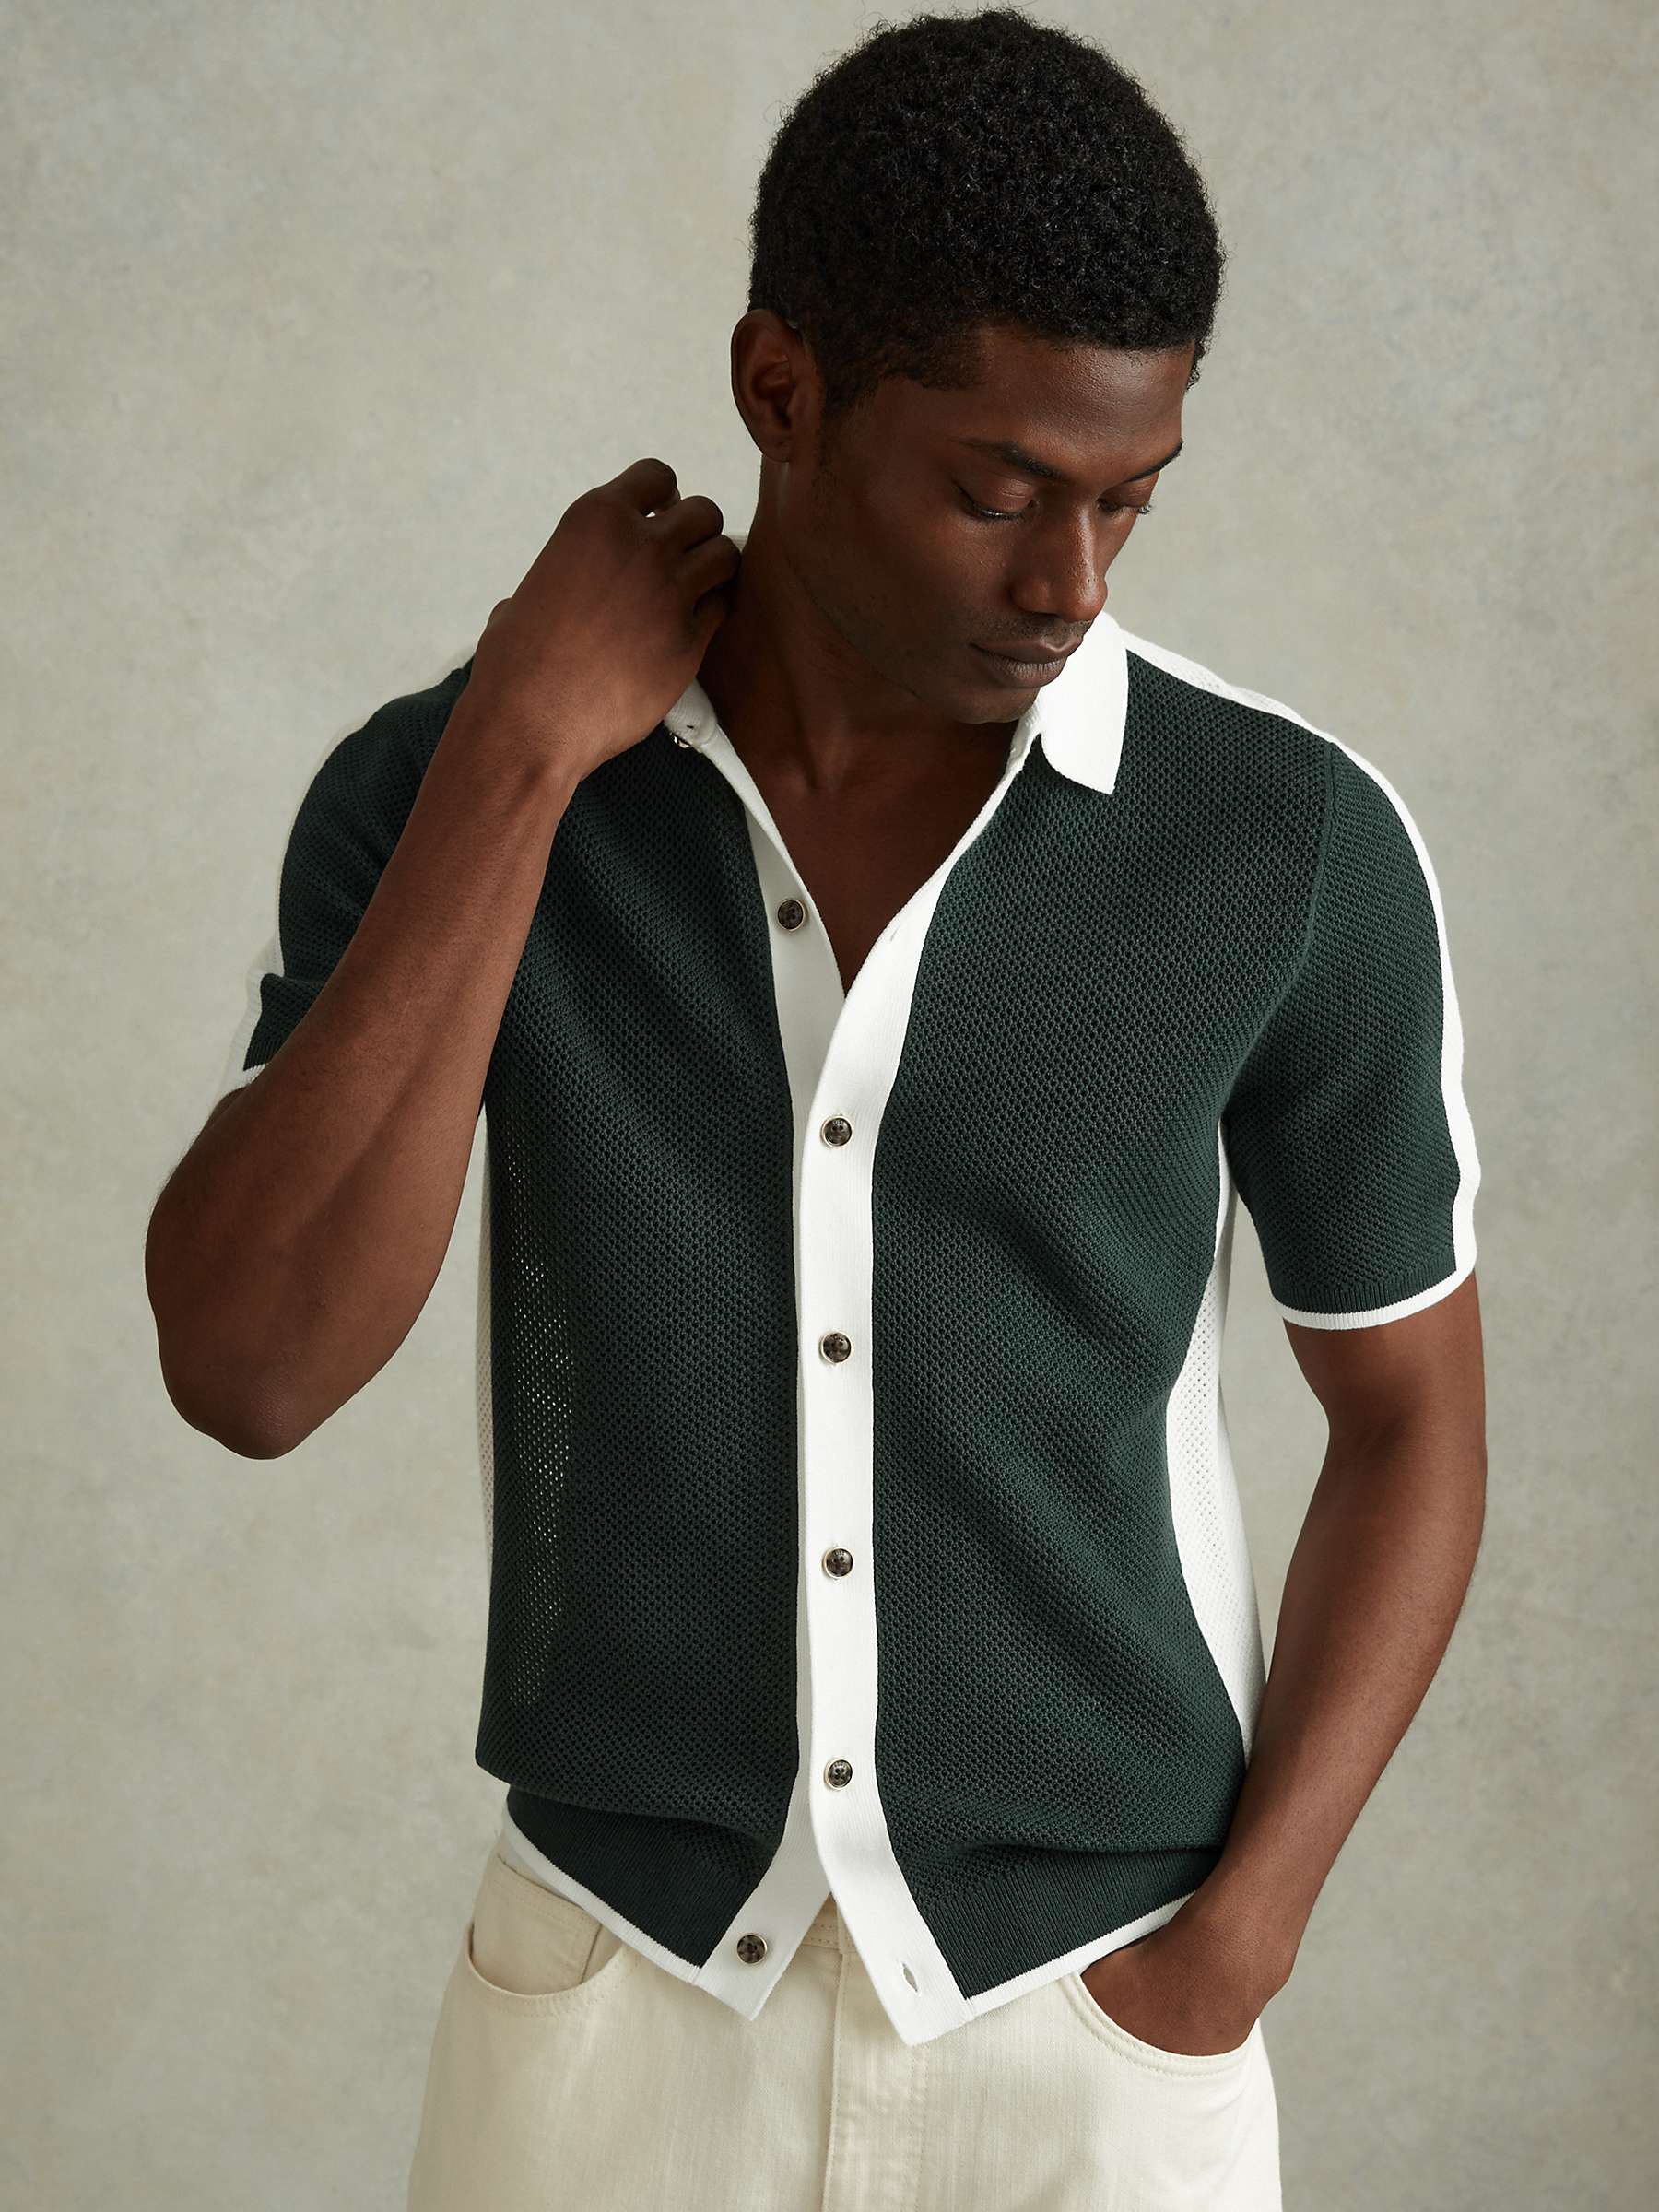 Buy Reiss Misto Textured Colour Block Shirt, Green/Optic White Online at johnlewis.com